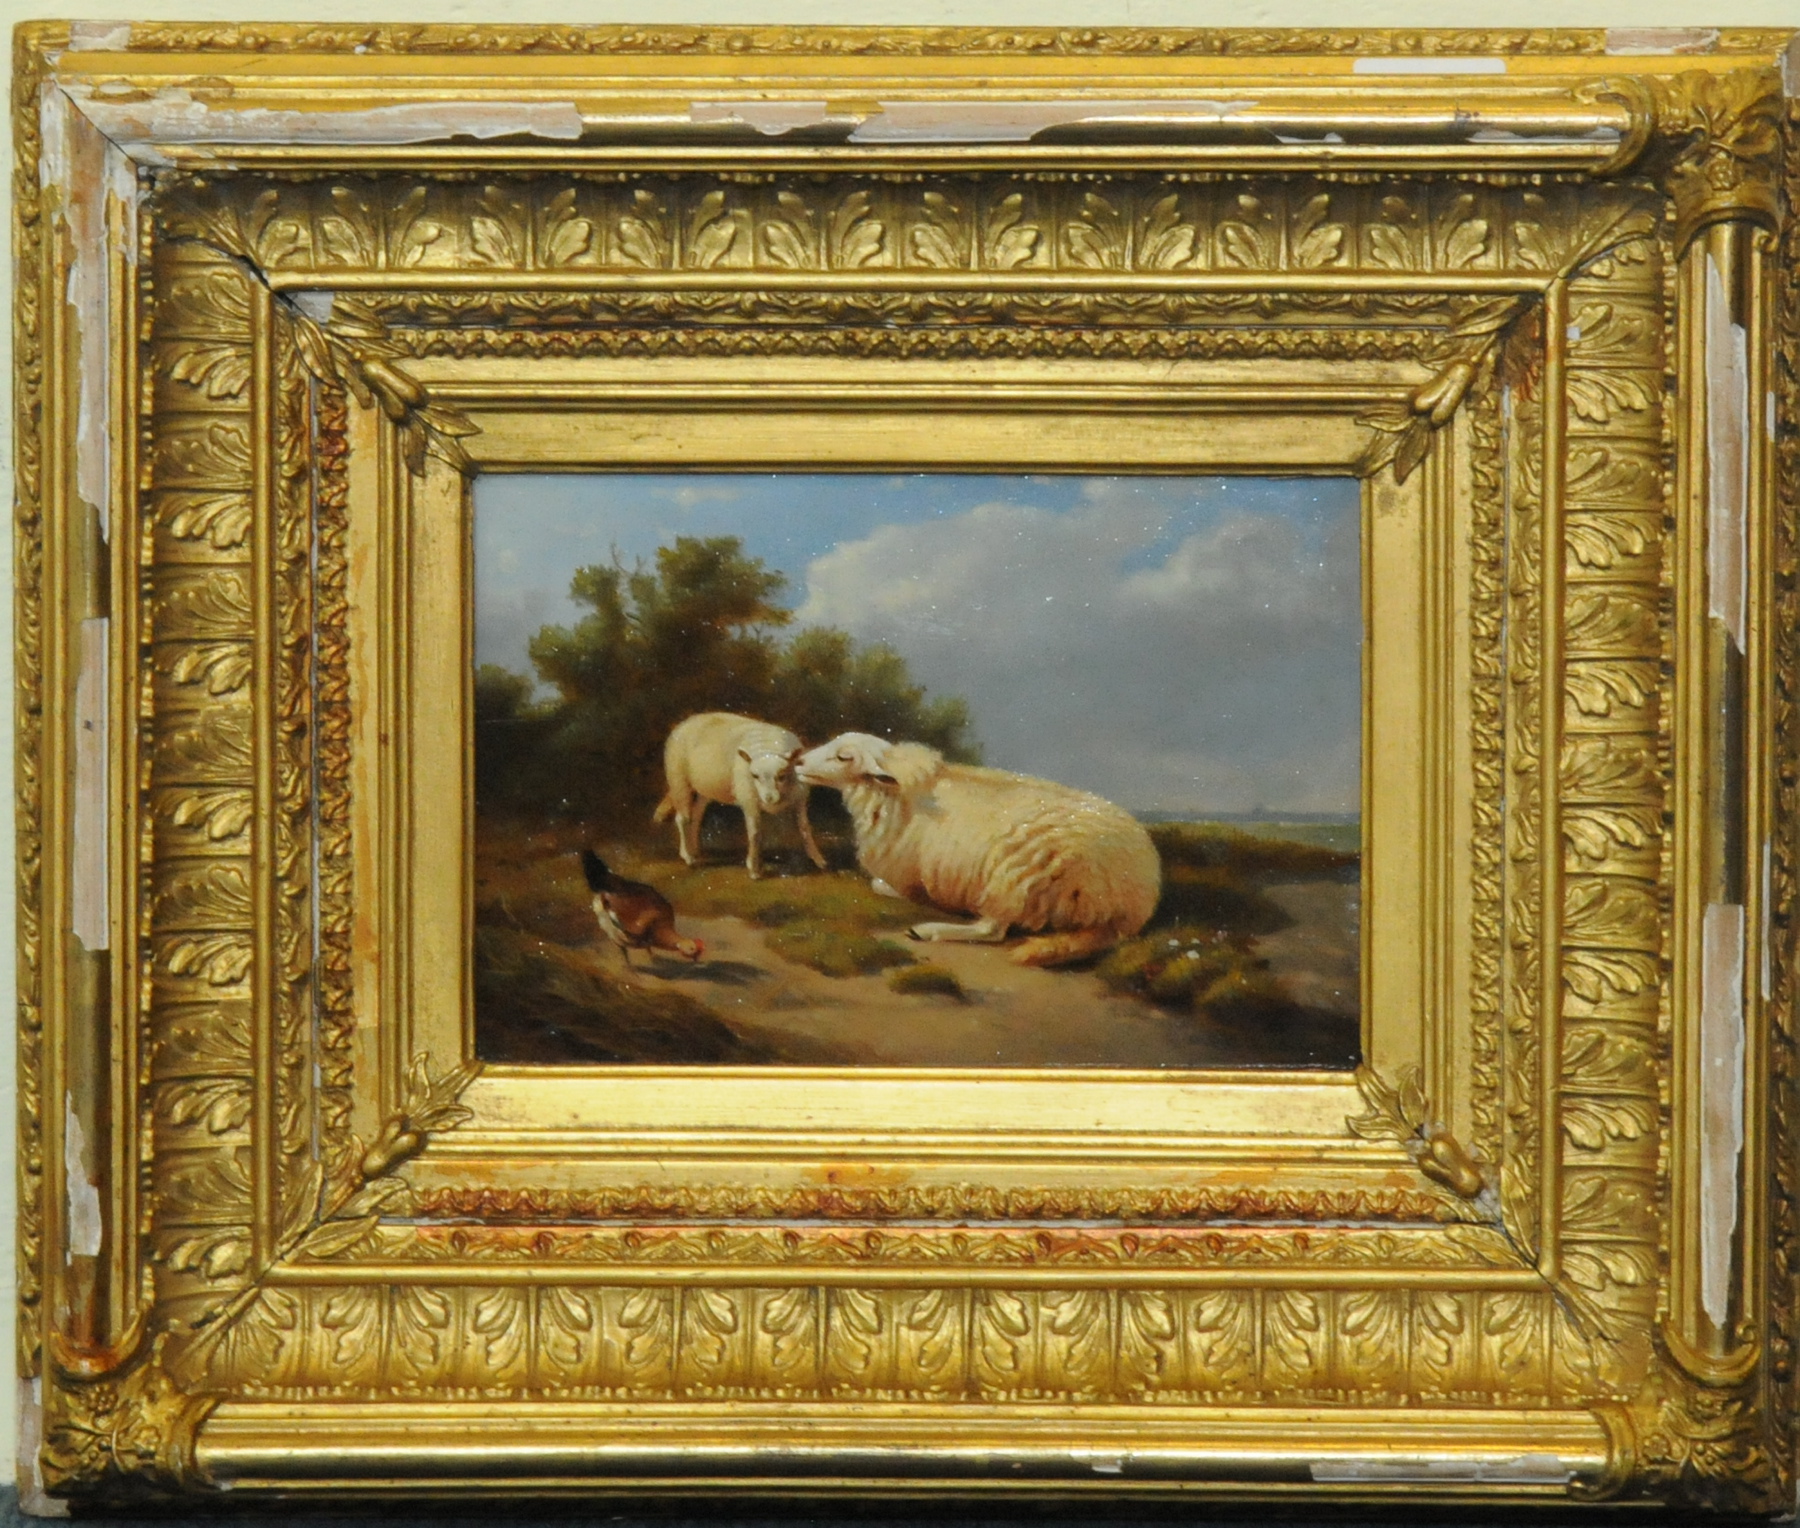 19TH CENTURY DUTCH SCHOOL - H. VANDO....
Landscape with sheep.
Oil on panel. 5¼" x 7½".
Indistinctly